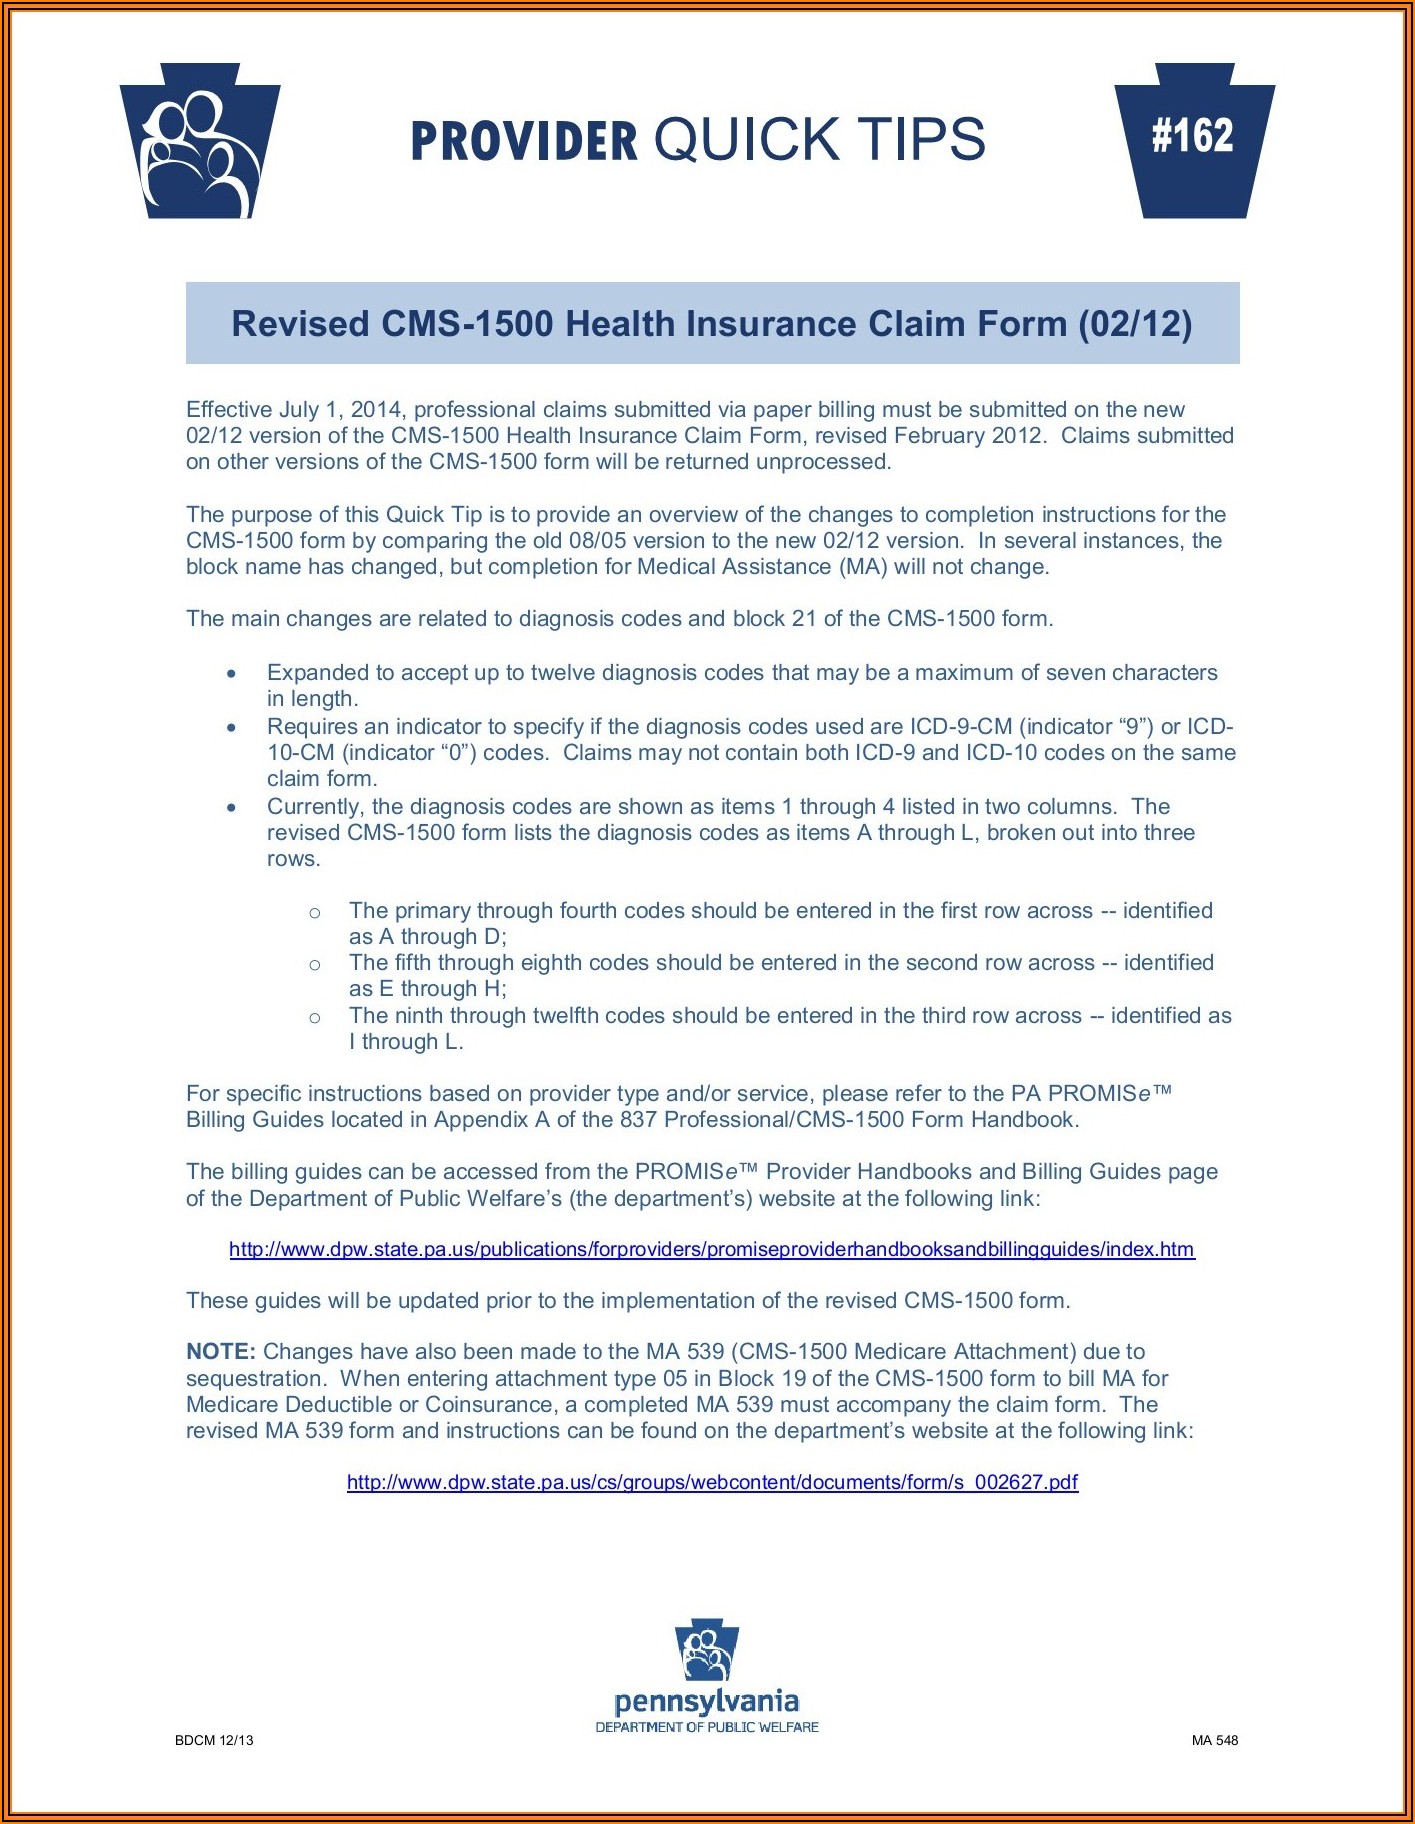 Obamacare Health Insurance Application Form